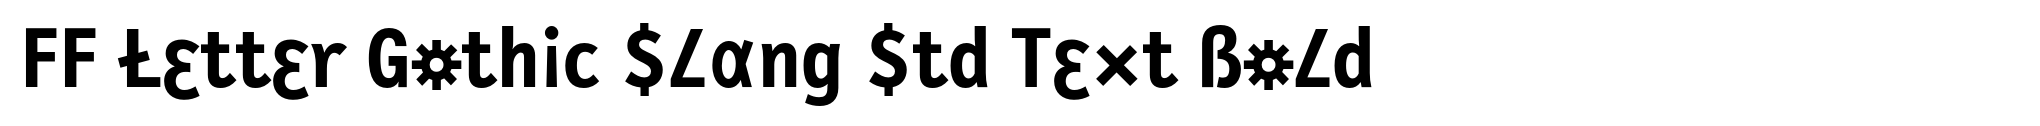 FF Letter Gothic Slang Std Text Bold image